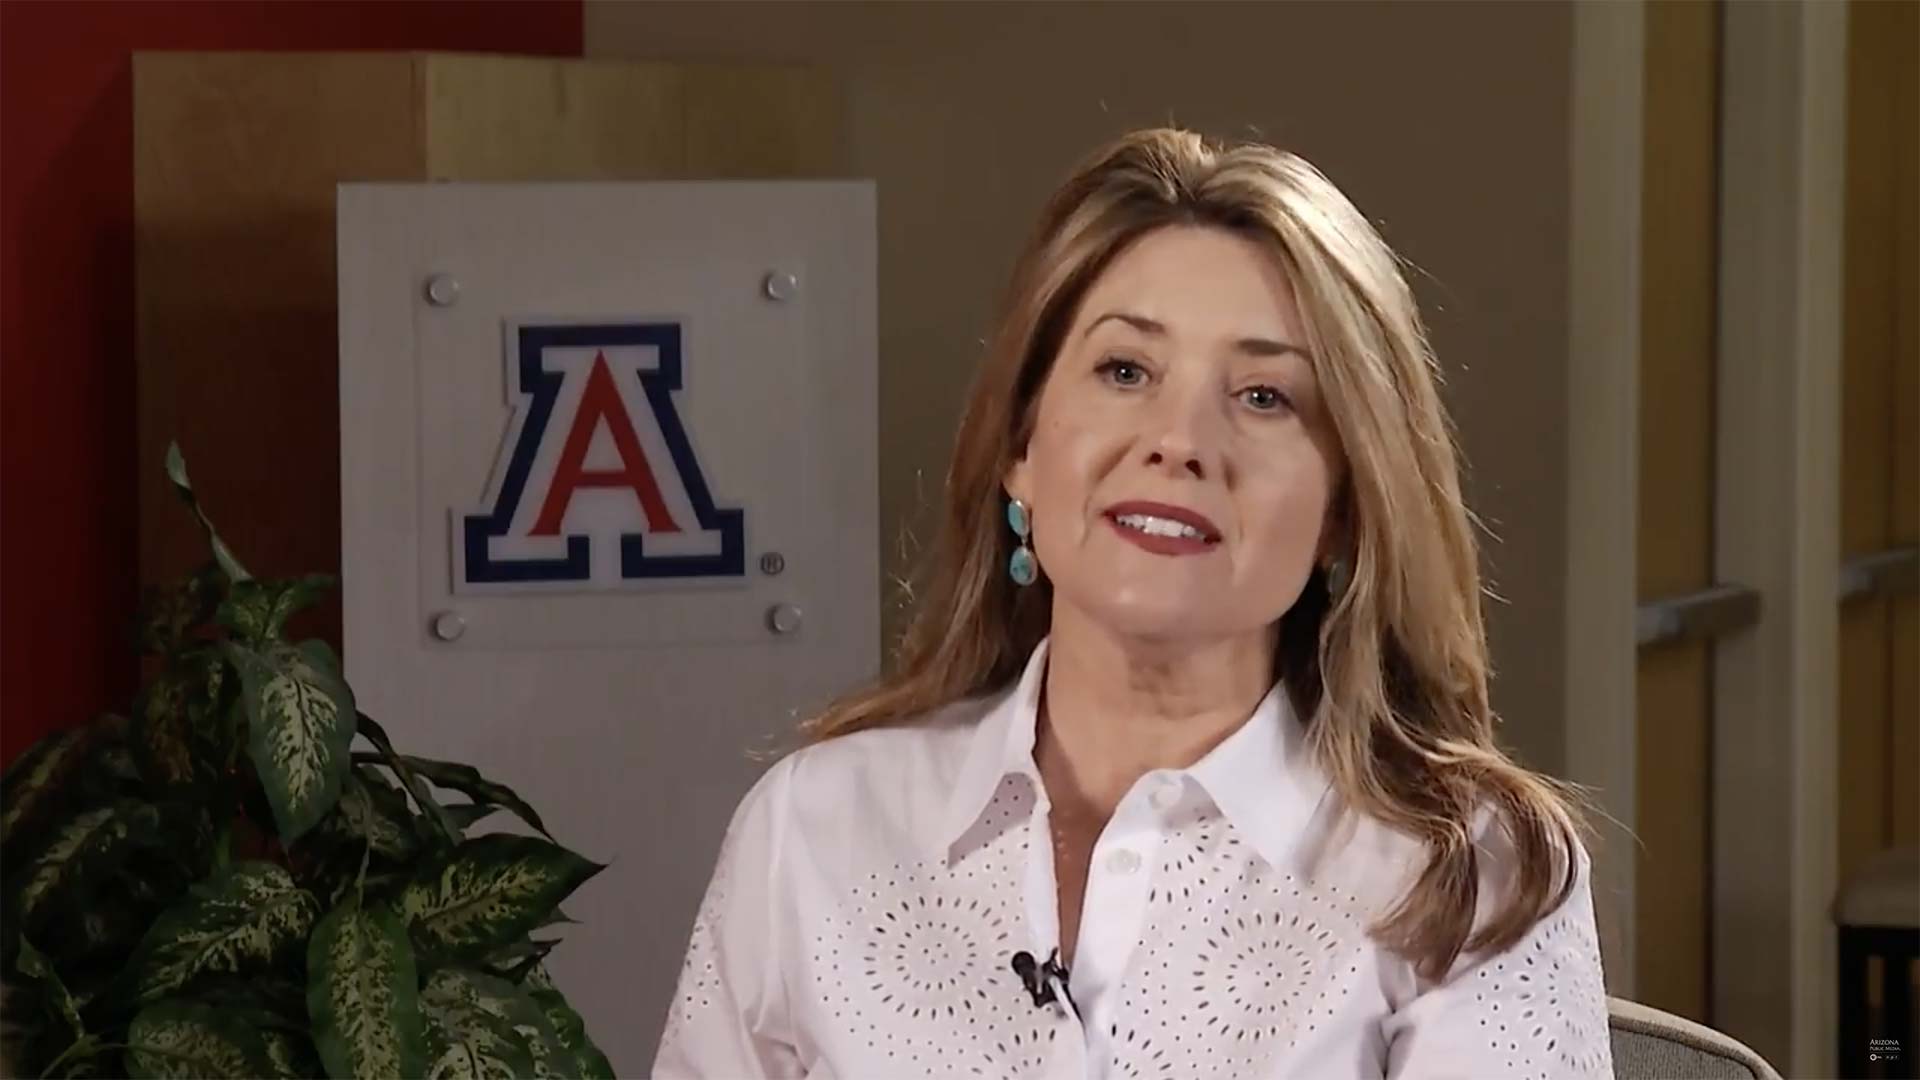 Eileen Klein started serving as ABOR president in 2013.